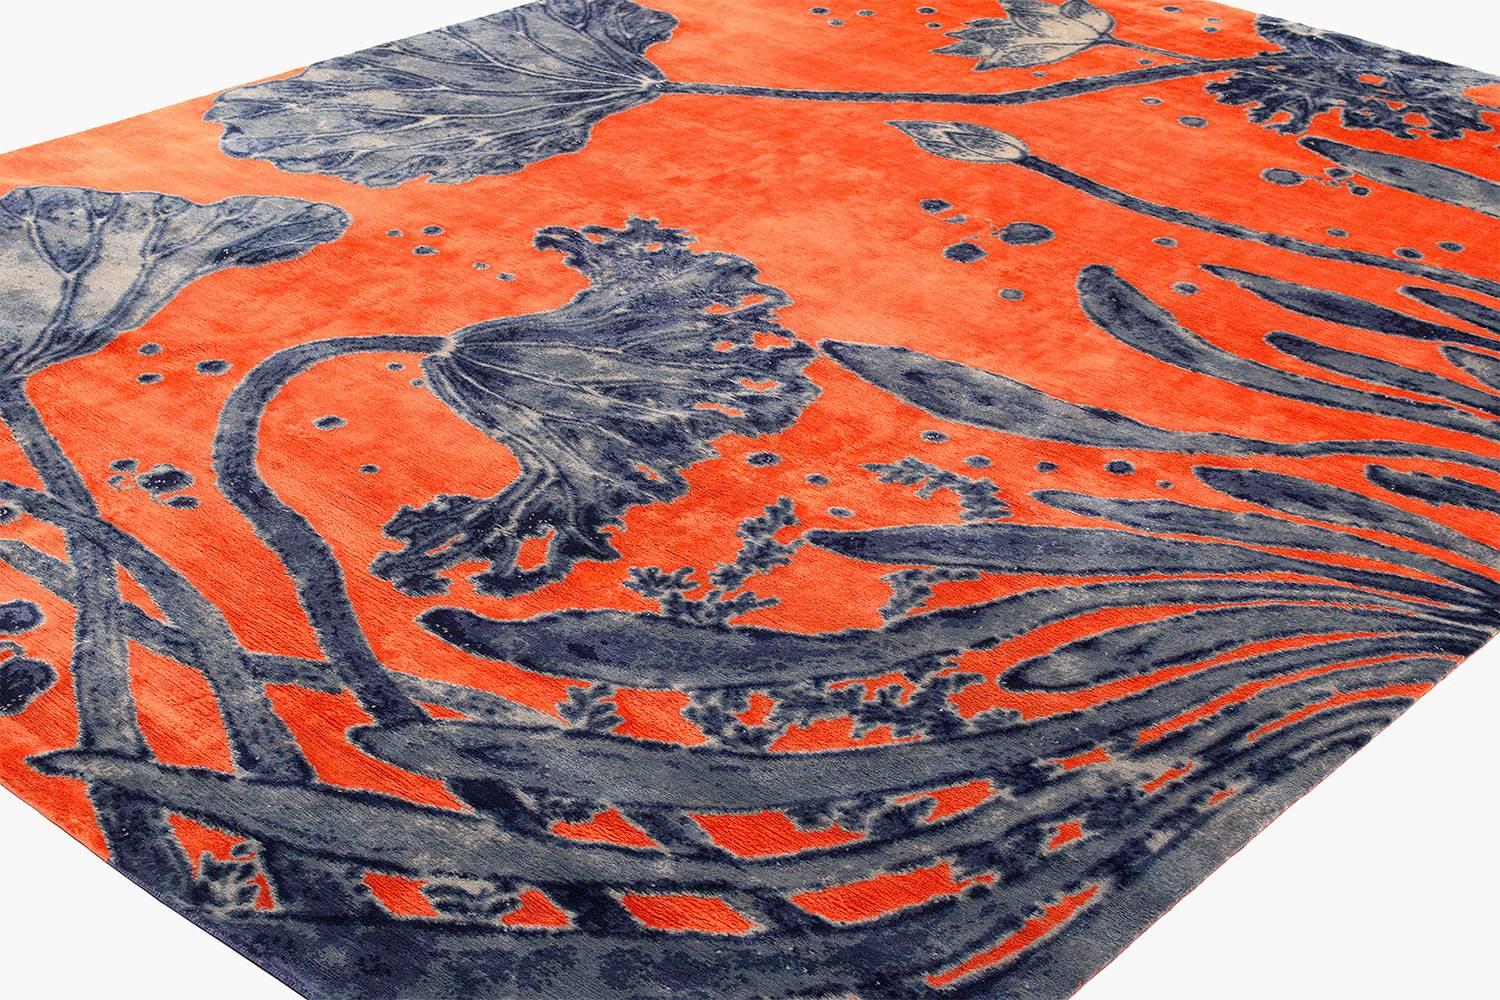 Organic Modern Orange and Indigo 'Water Flowers' Area Rug in Silk and Wool